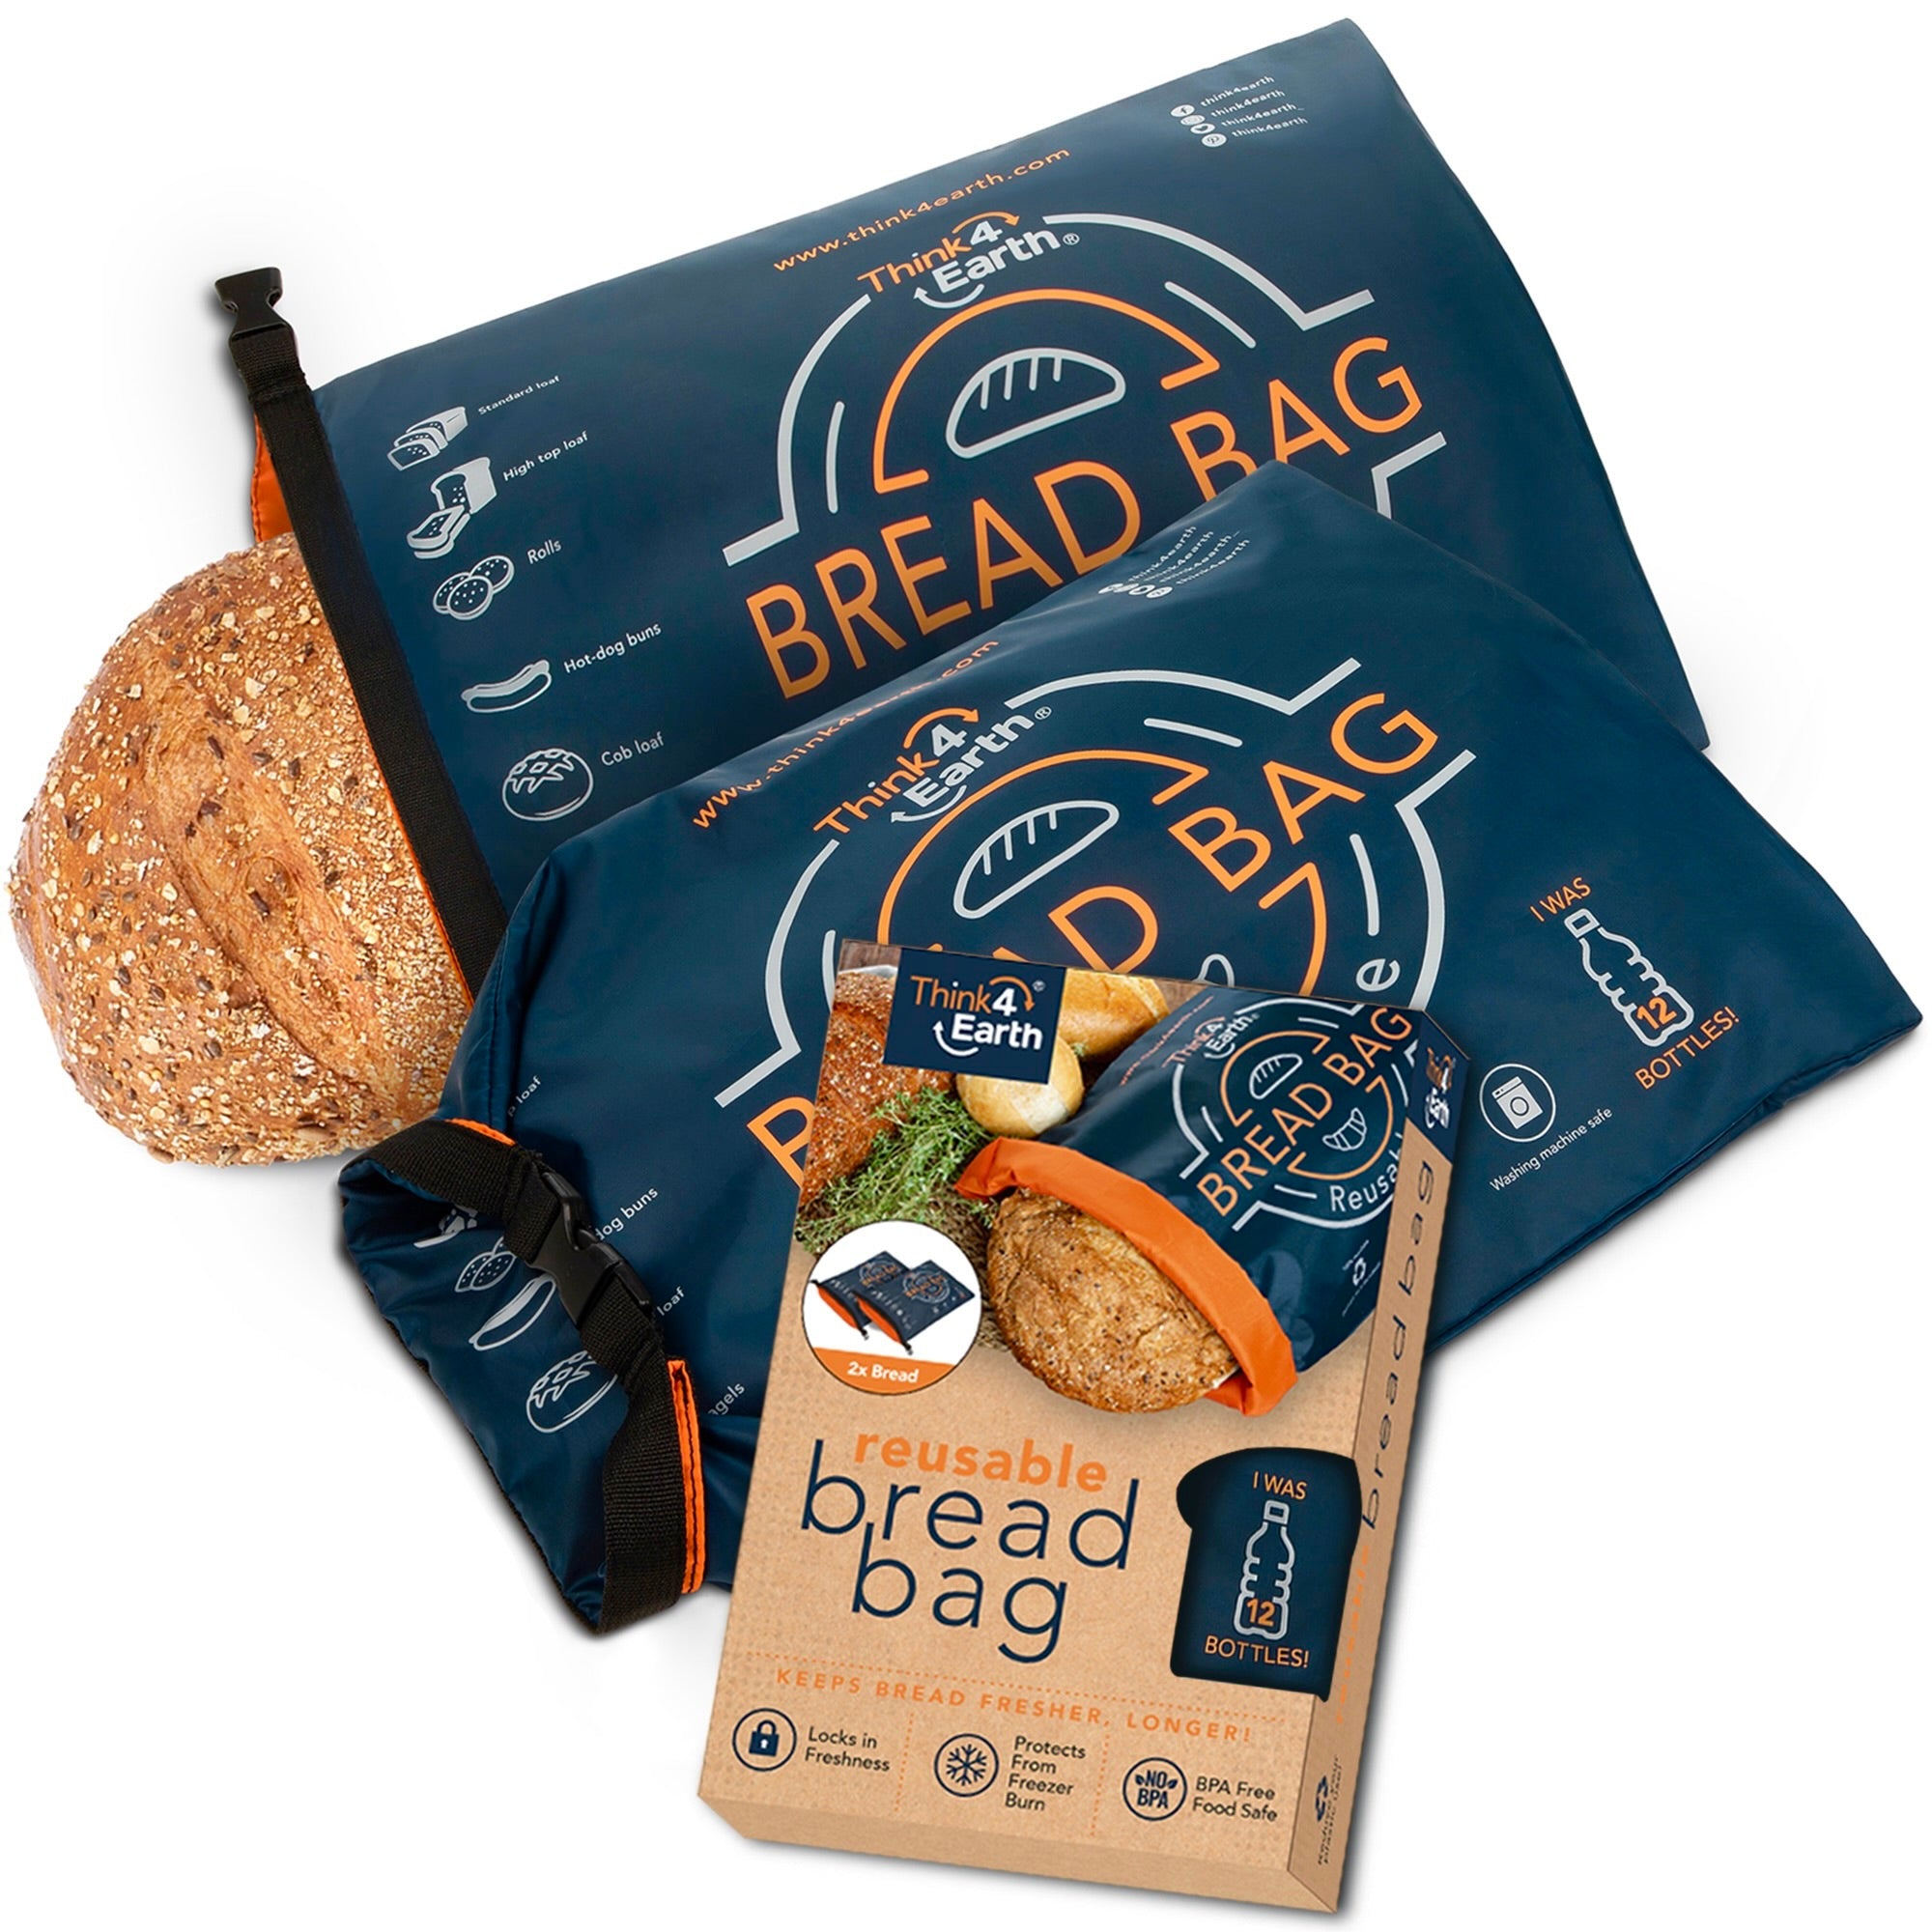 Reusable Freezer Bread Bag – Think4Earth